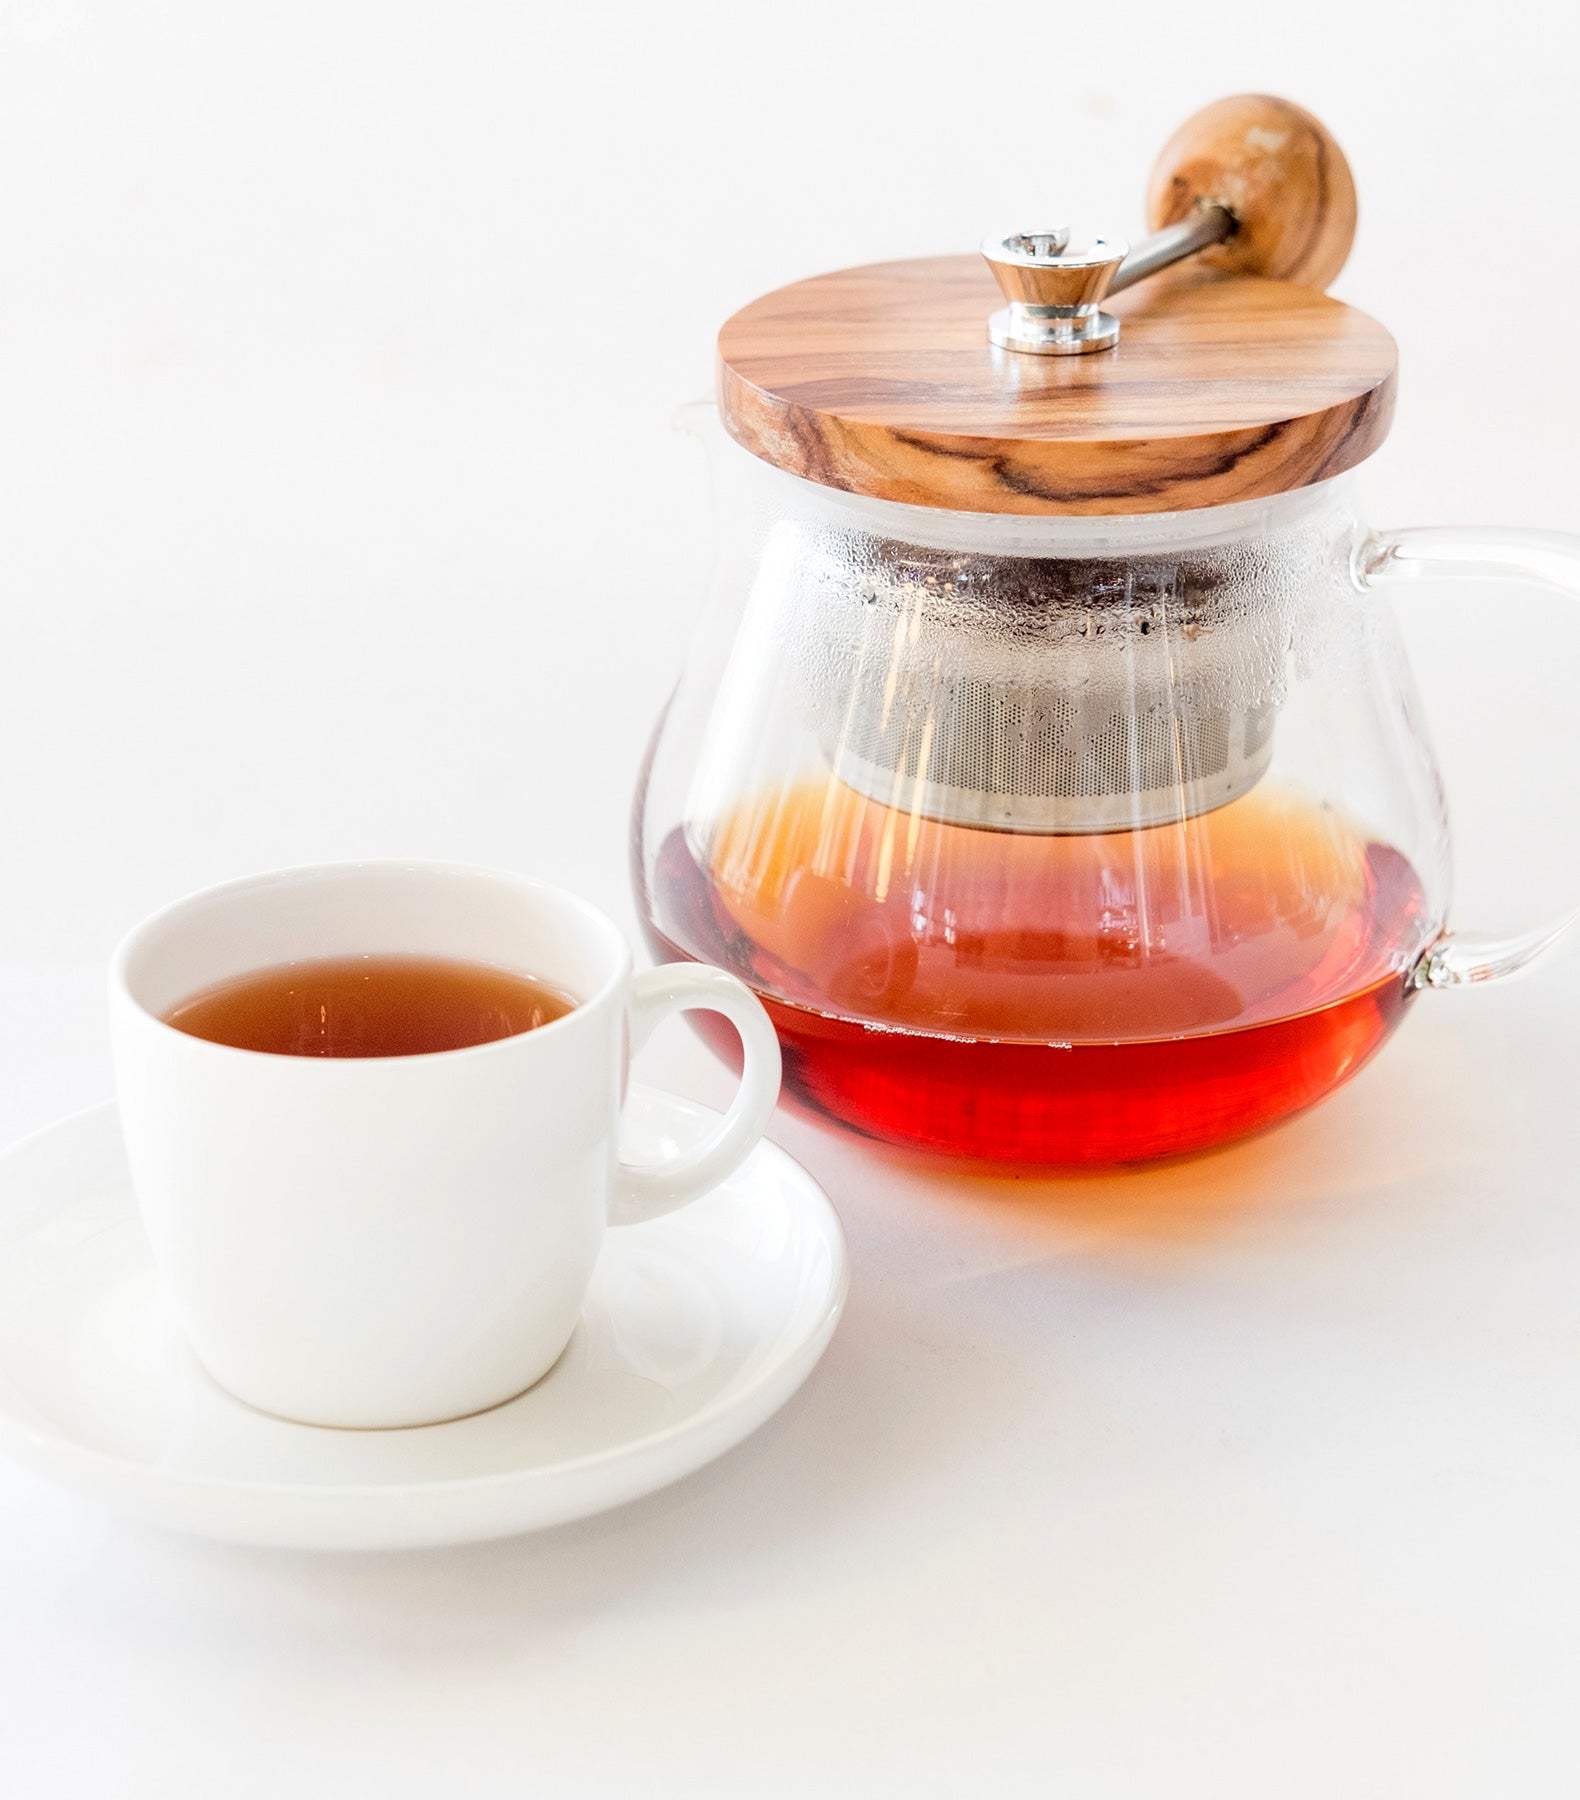 Pu’erh Teas - The Finest Of Teas